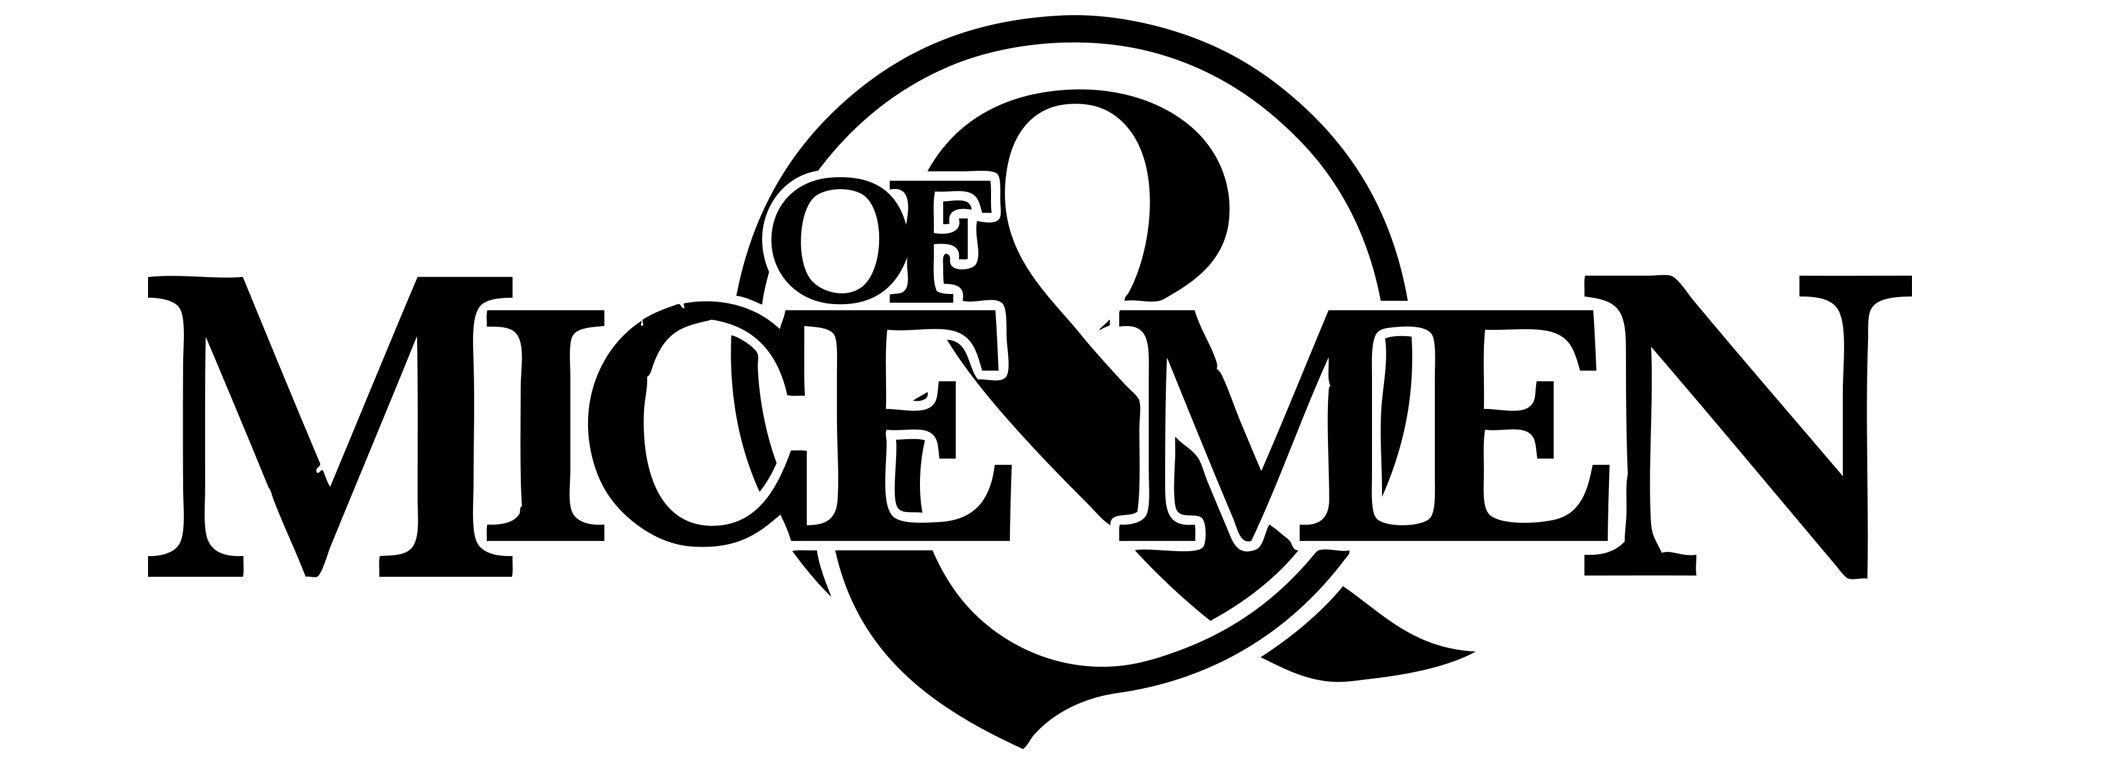 Of Mice and Men Logo - File:Of mice & men logo.jpg - Wikimedia Commons